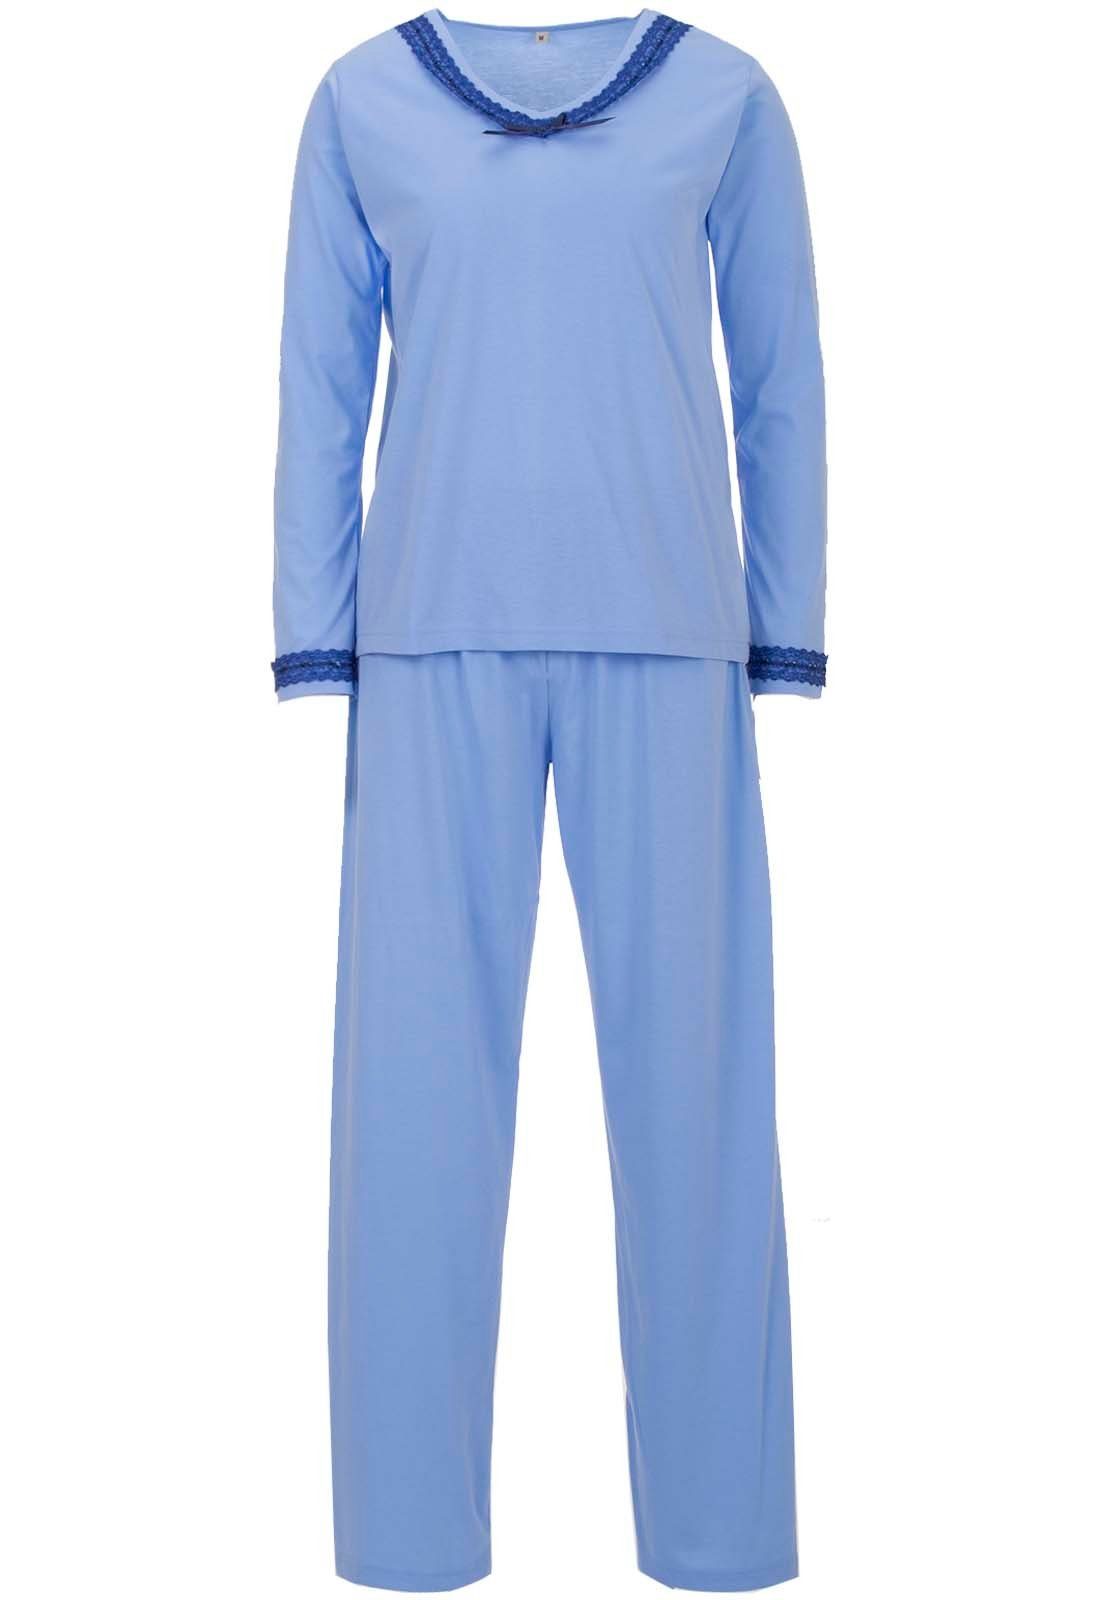 zeitlos Schlafanzug Pyjama Set Langarm - Spitze Uni blau